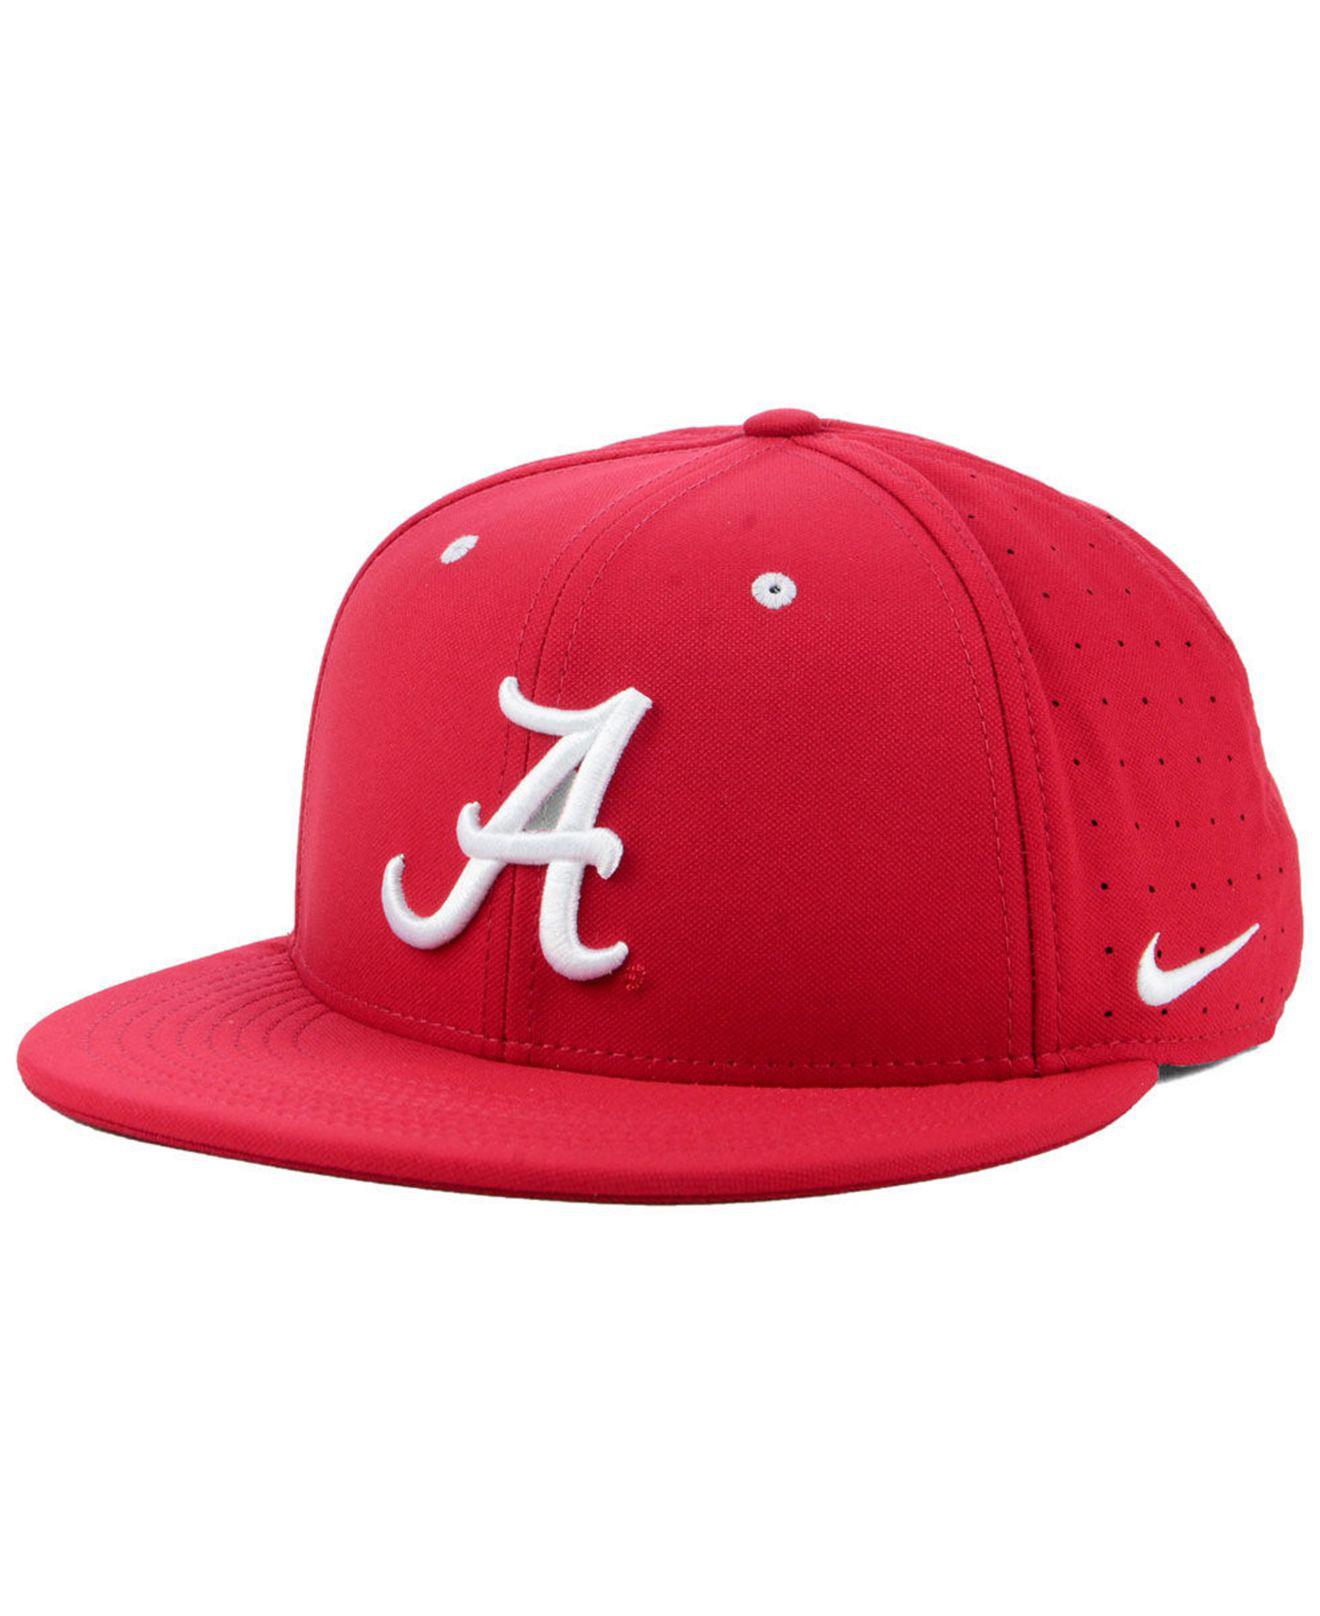 Campus Hats University of Alabama Crimson Tide Red/White Hyper Cool Performance Tech Performance Mens/Womens Adjustable Baseball Hat/Cap Size Medium 7 1/8-7 1/4